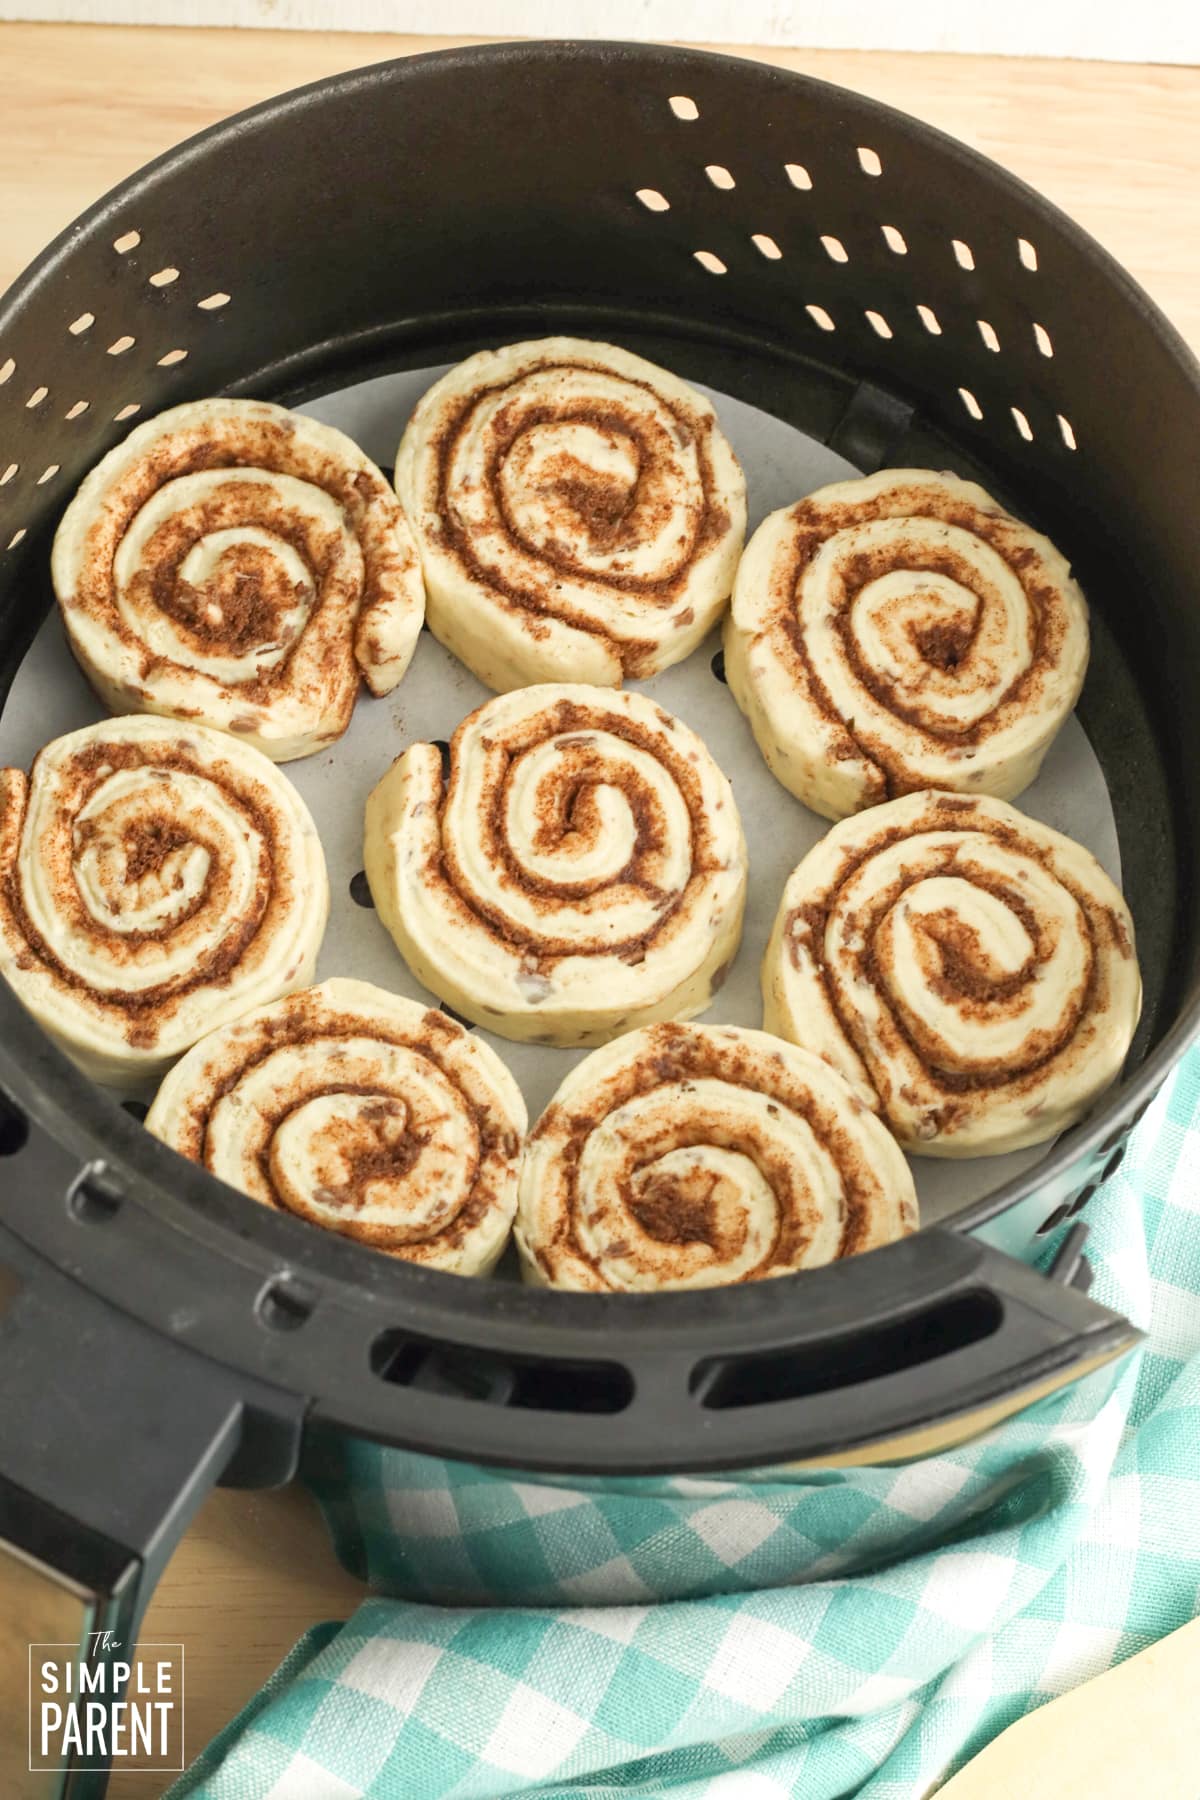 Refrigerated cinnamon rolls in air fryer basket